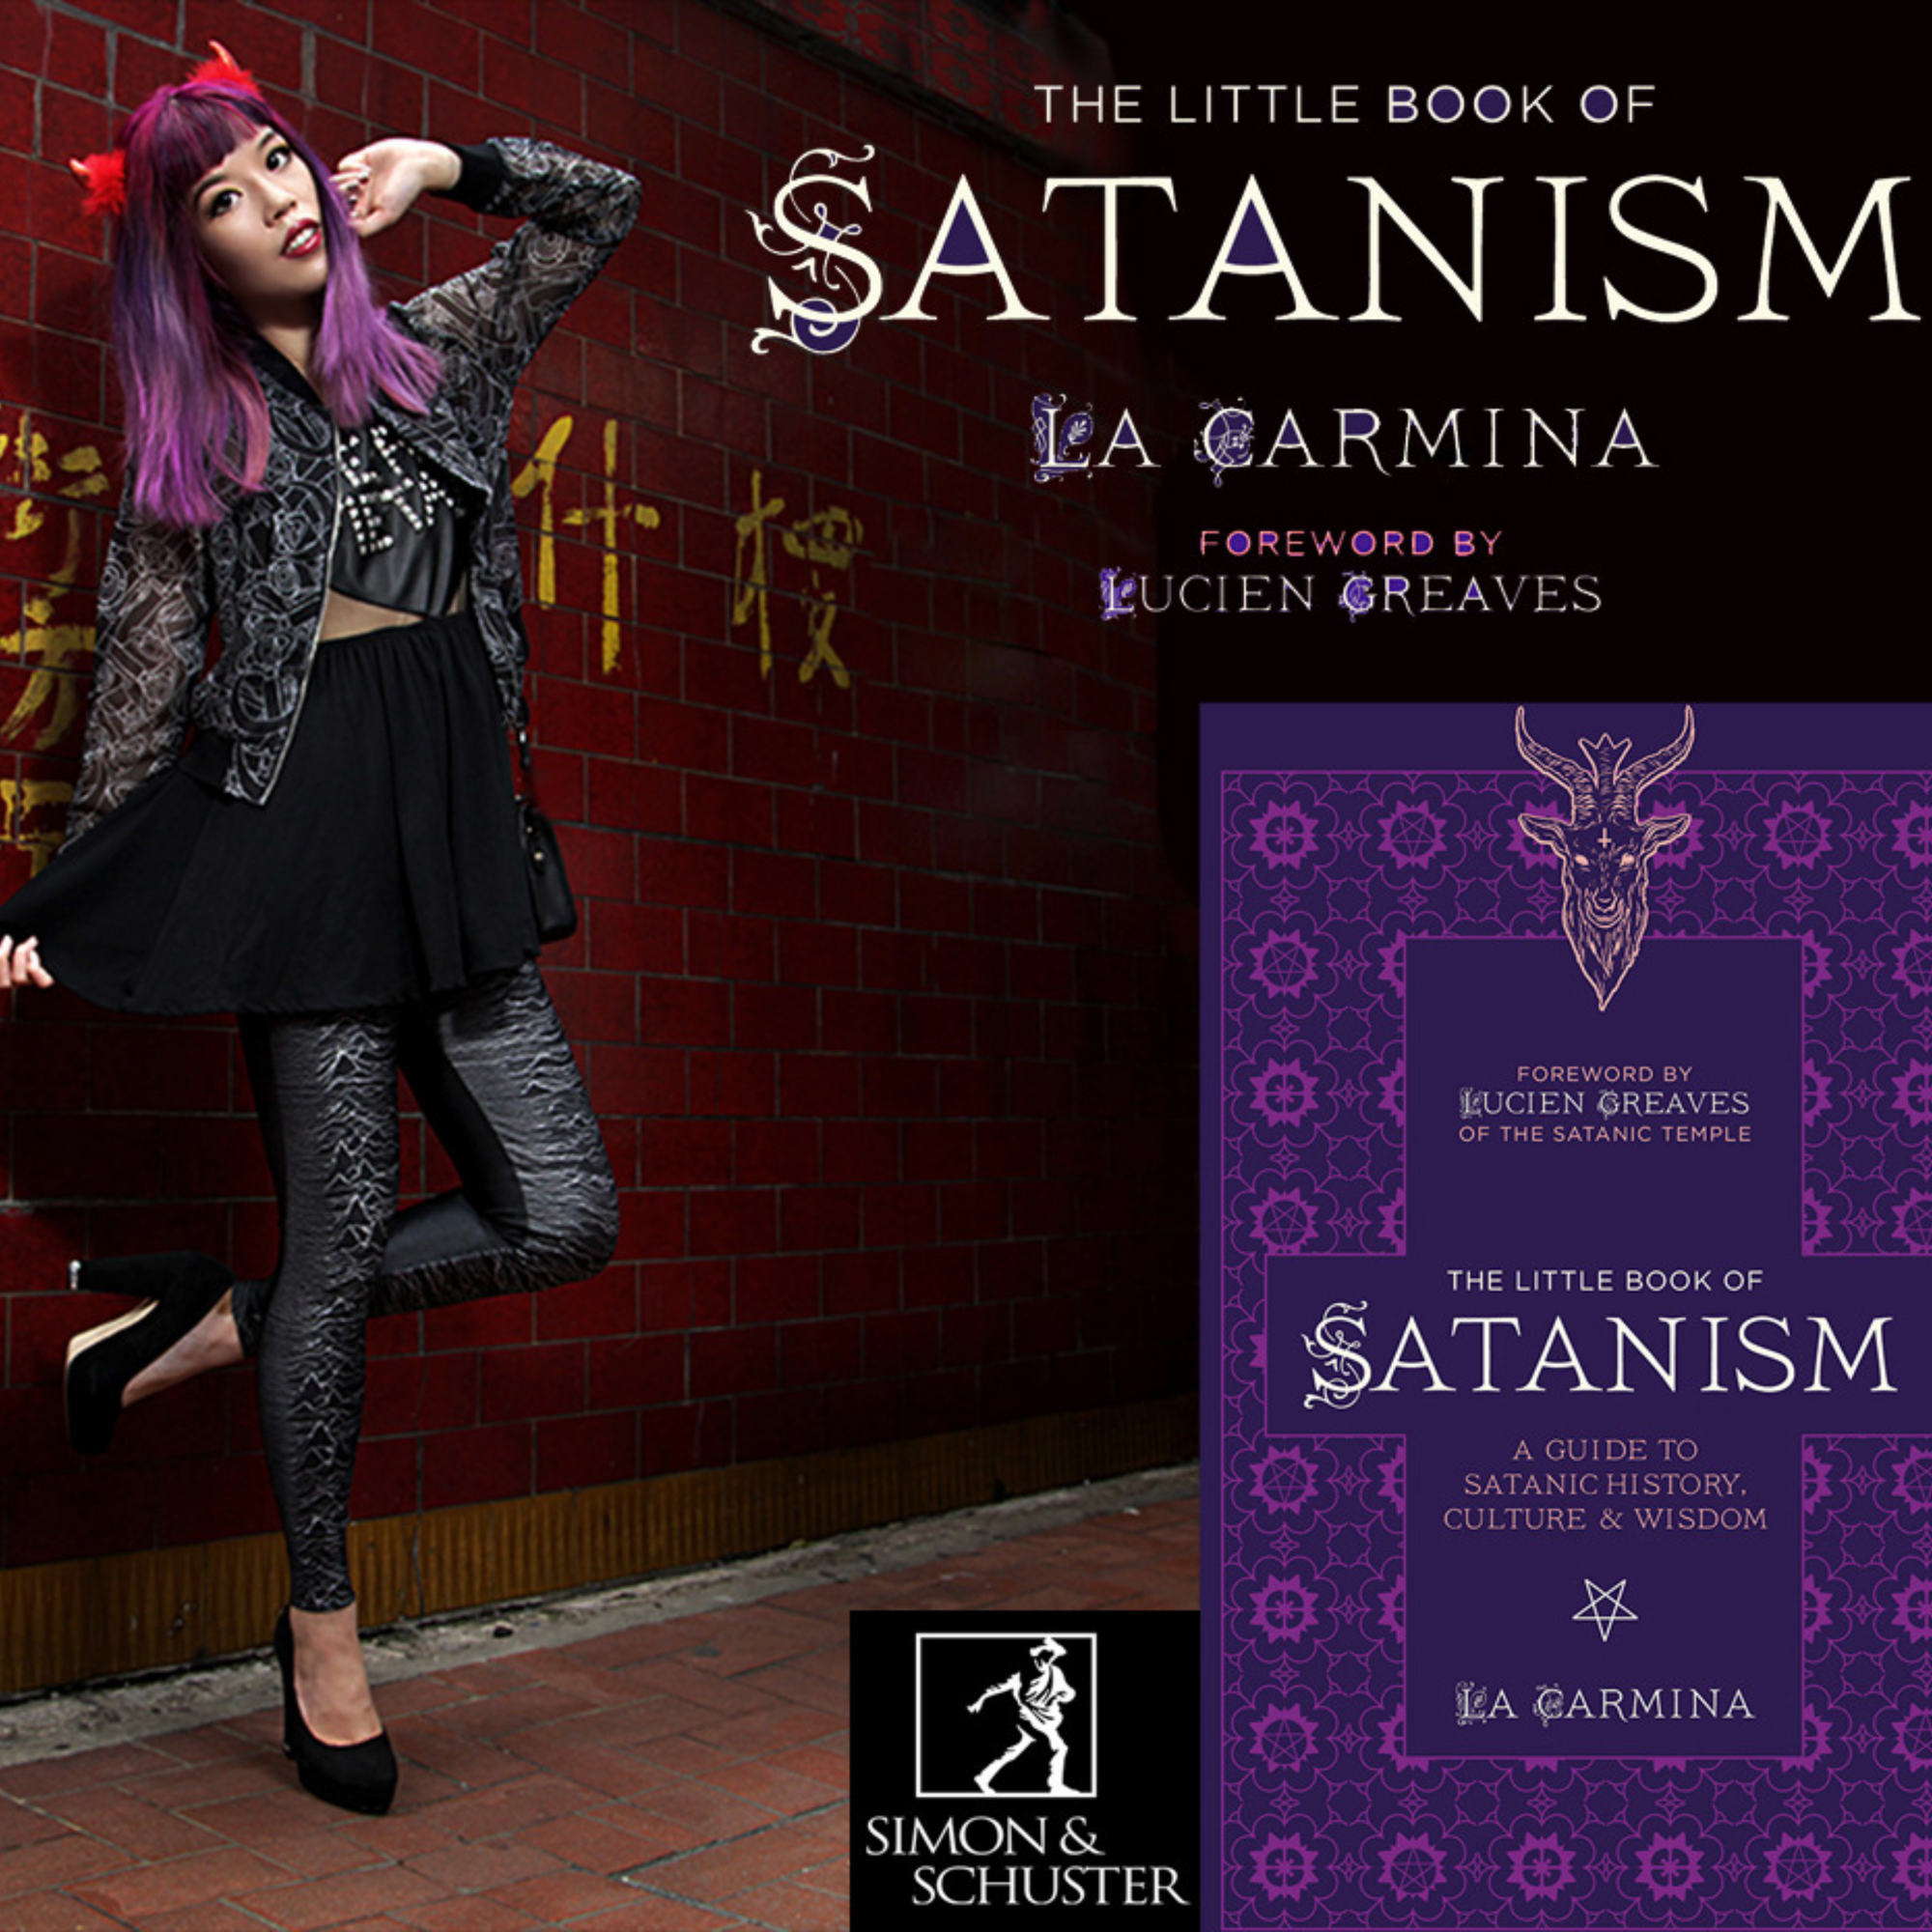 The Little Book of Satanism: A guide to Satanic History, Culture & Wisdom by La Carmina